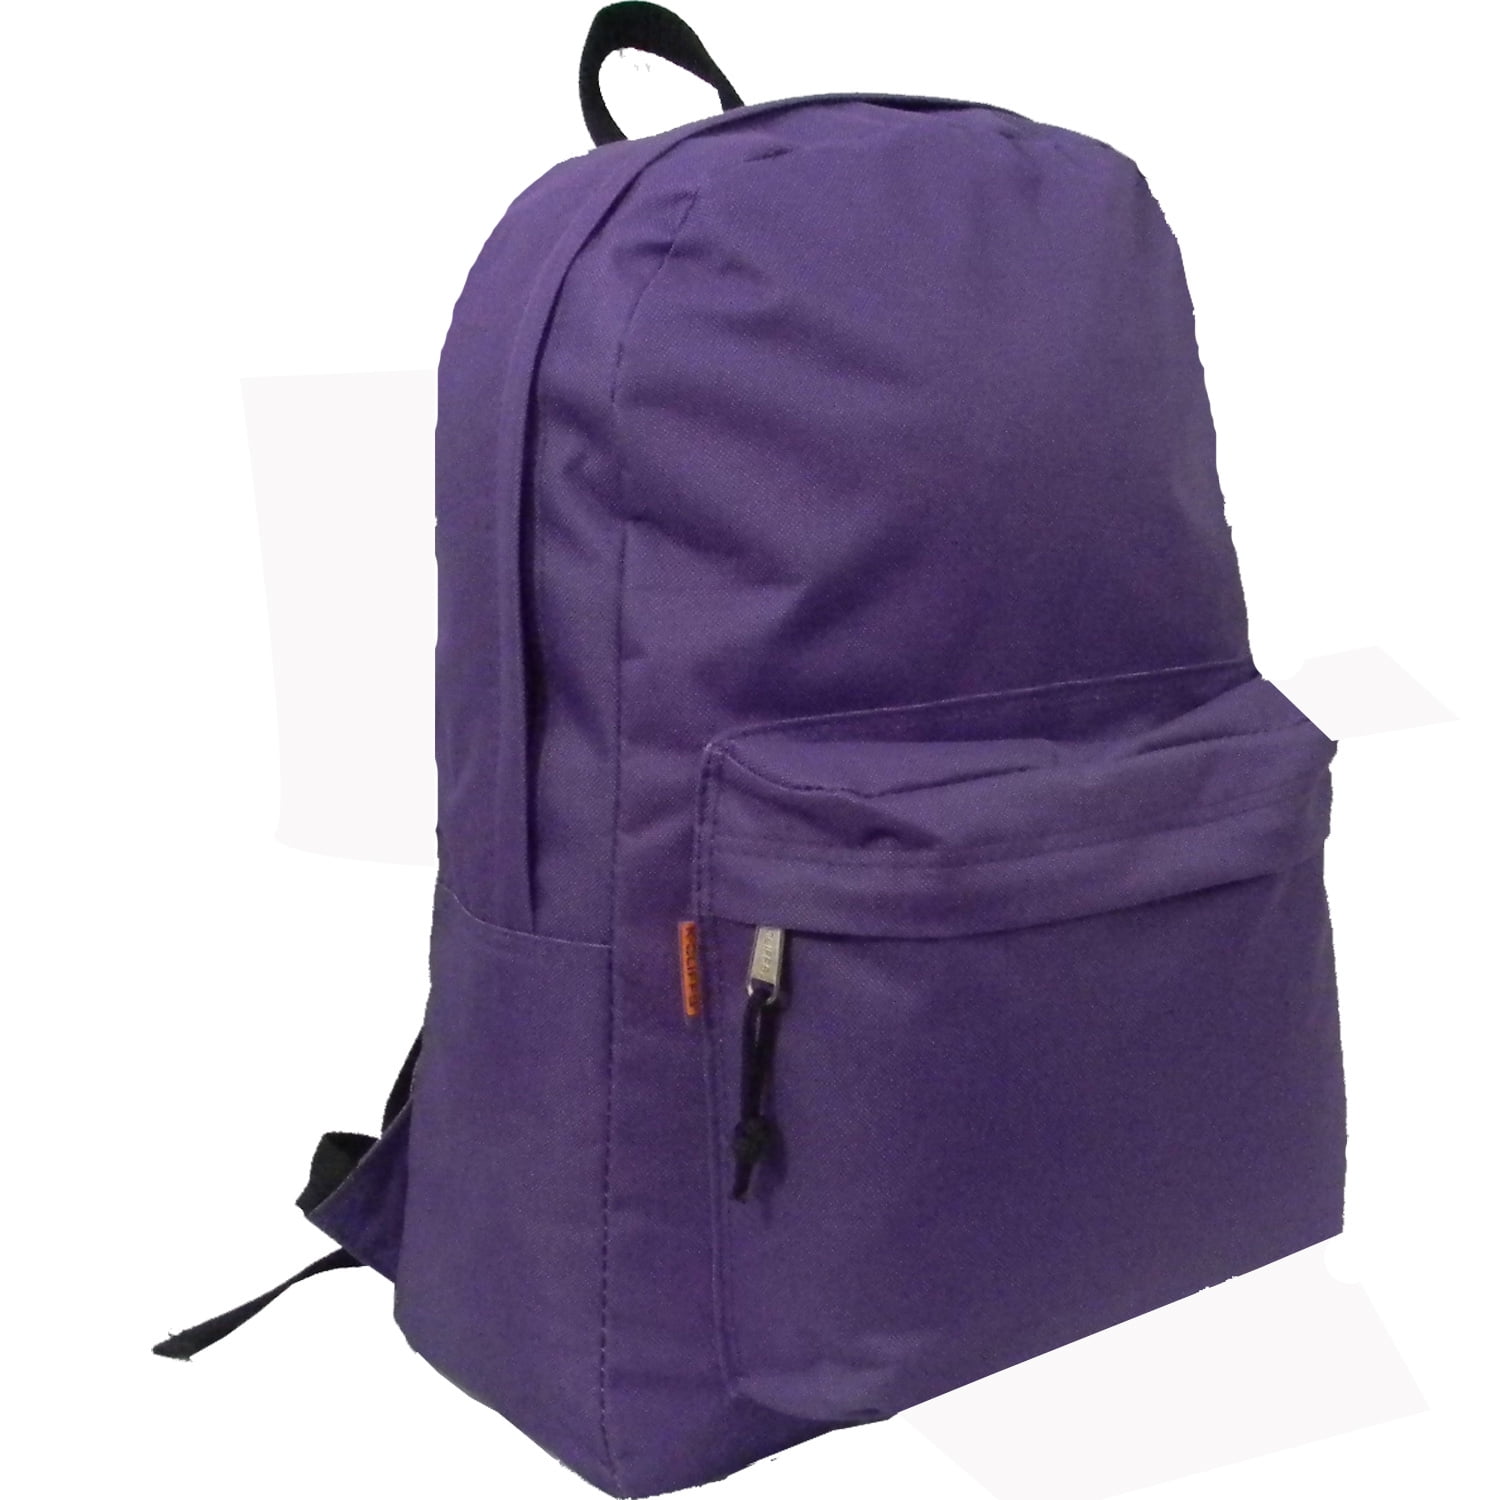 Backpack Classic School Bag Basic Daypack Simple Book Bag 16 Inch Purple